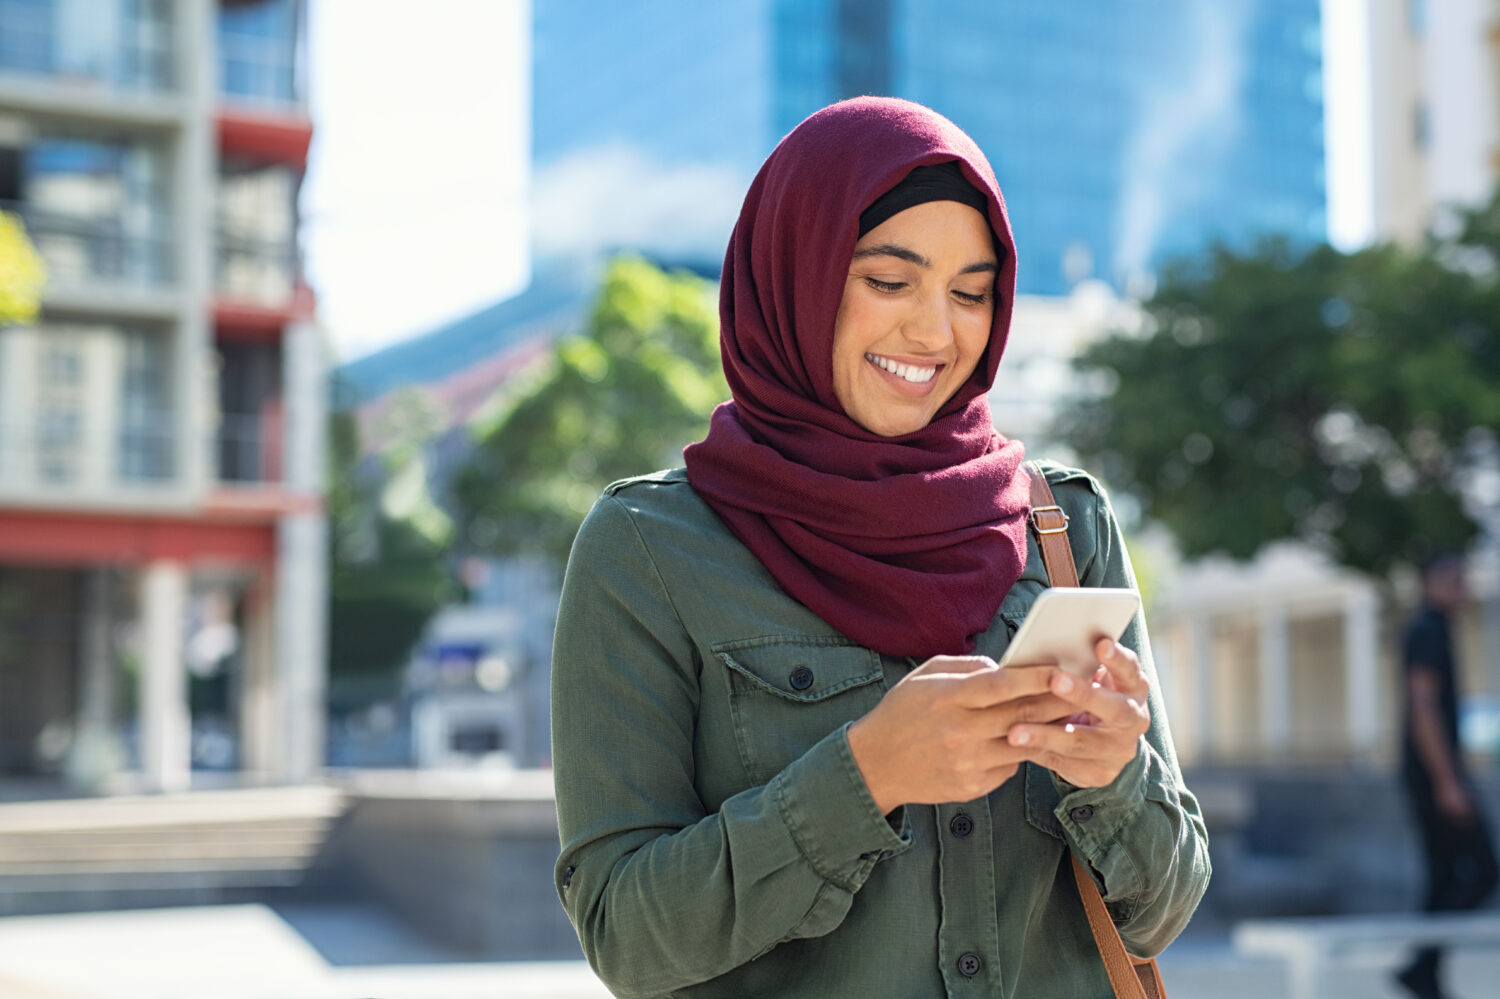 muslim woman using phone and smiling